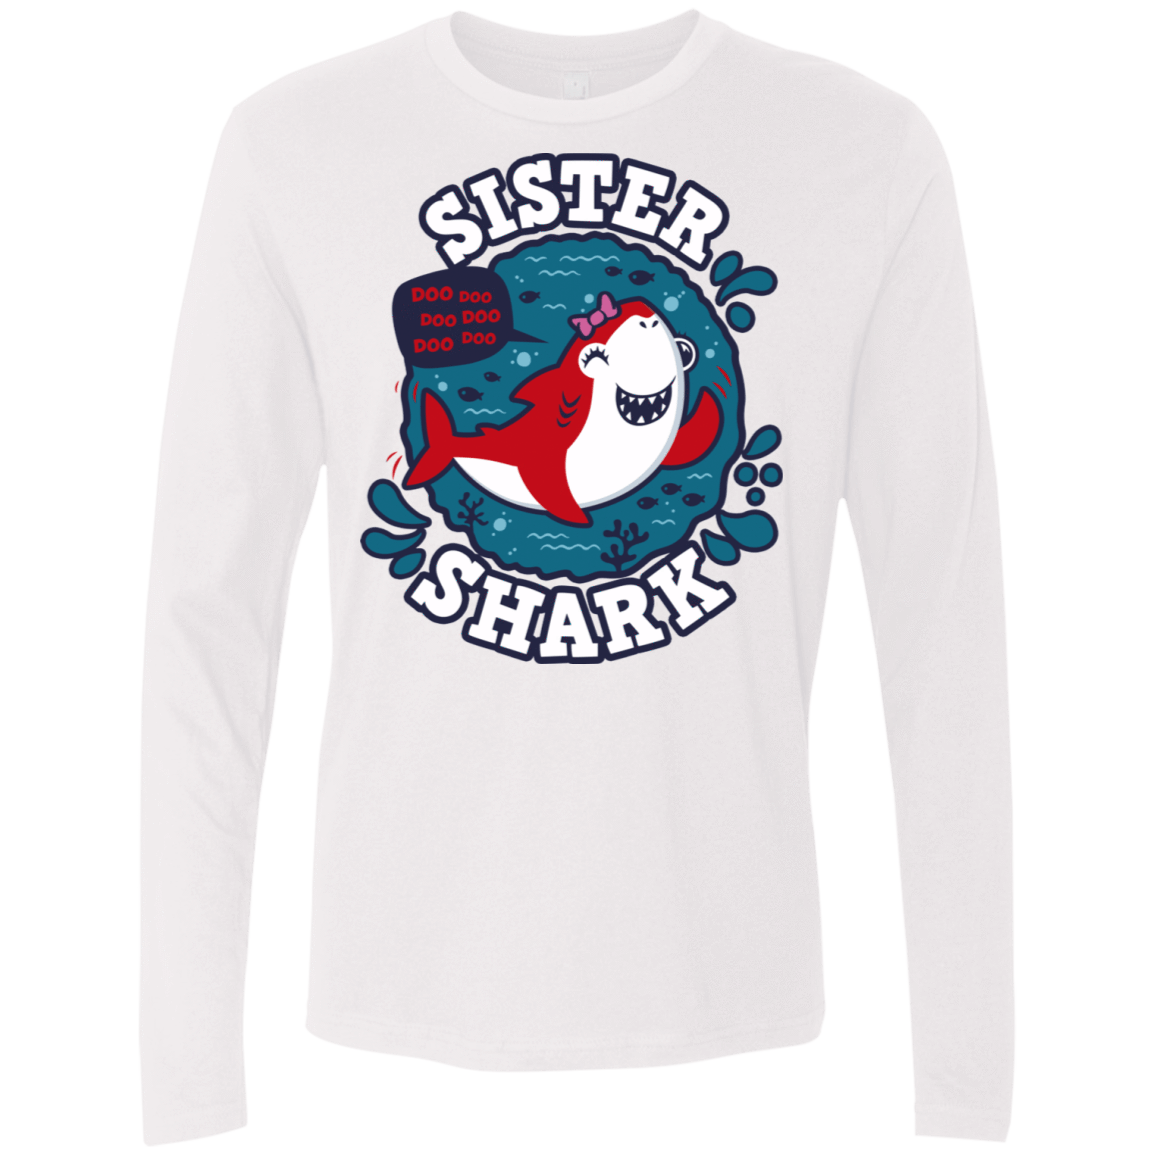 T-Shirts White / S Shark Family trazo - Sister Men's Premium Long Sleeve